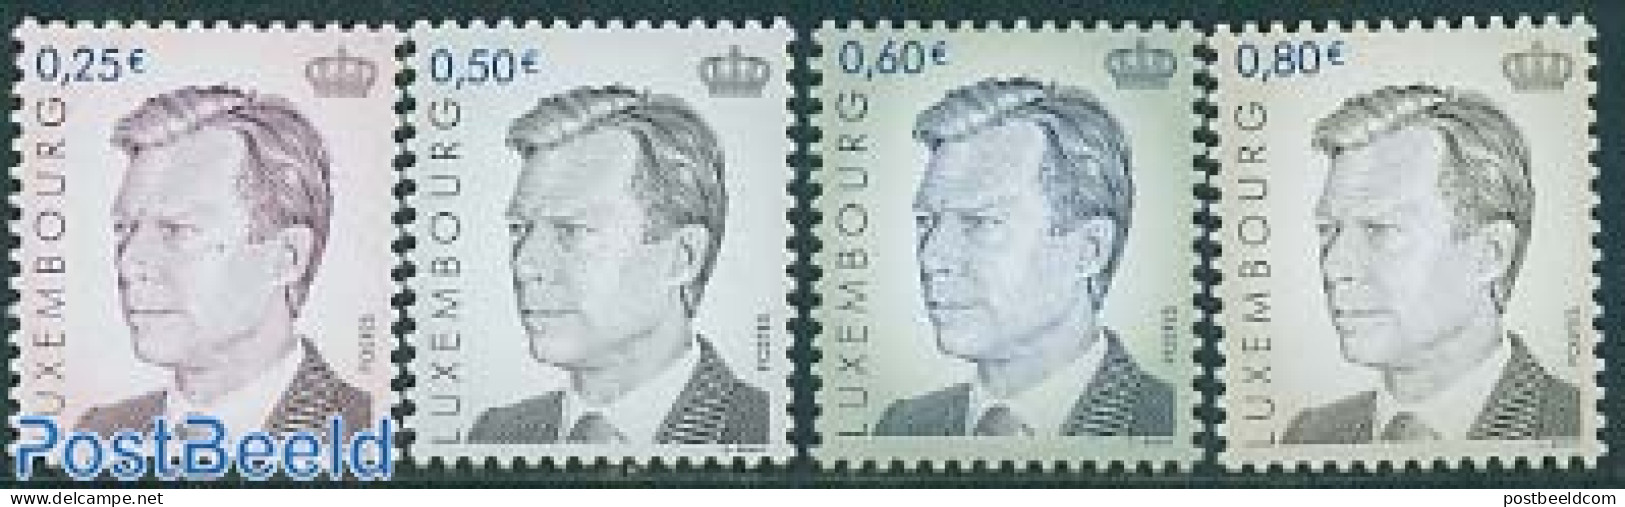 Luxemburg 2004 Definitives 4v, Mint NH - Unused Stamps